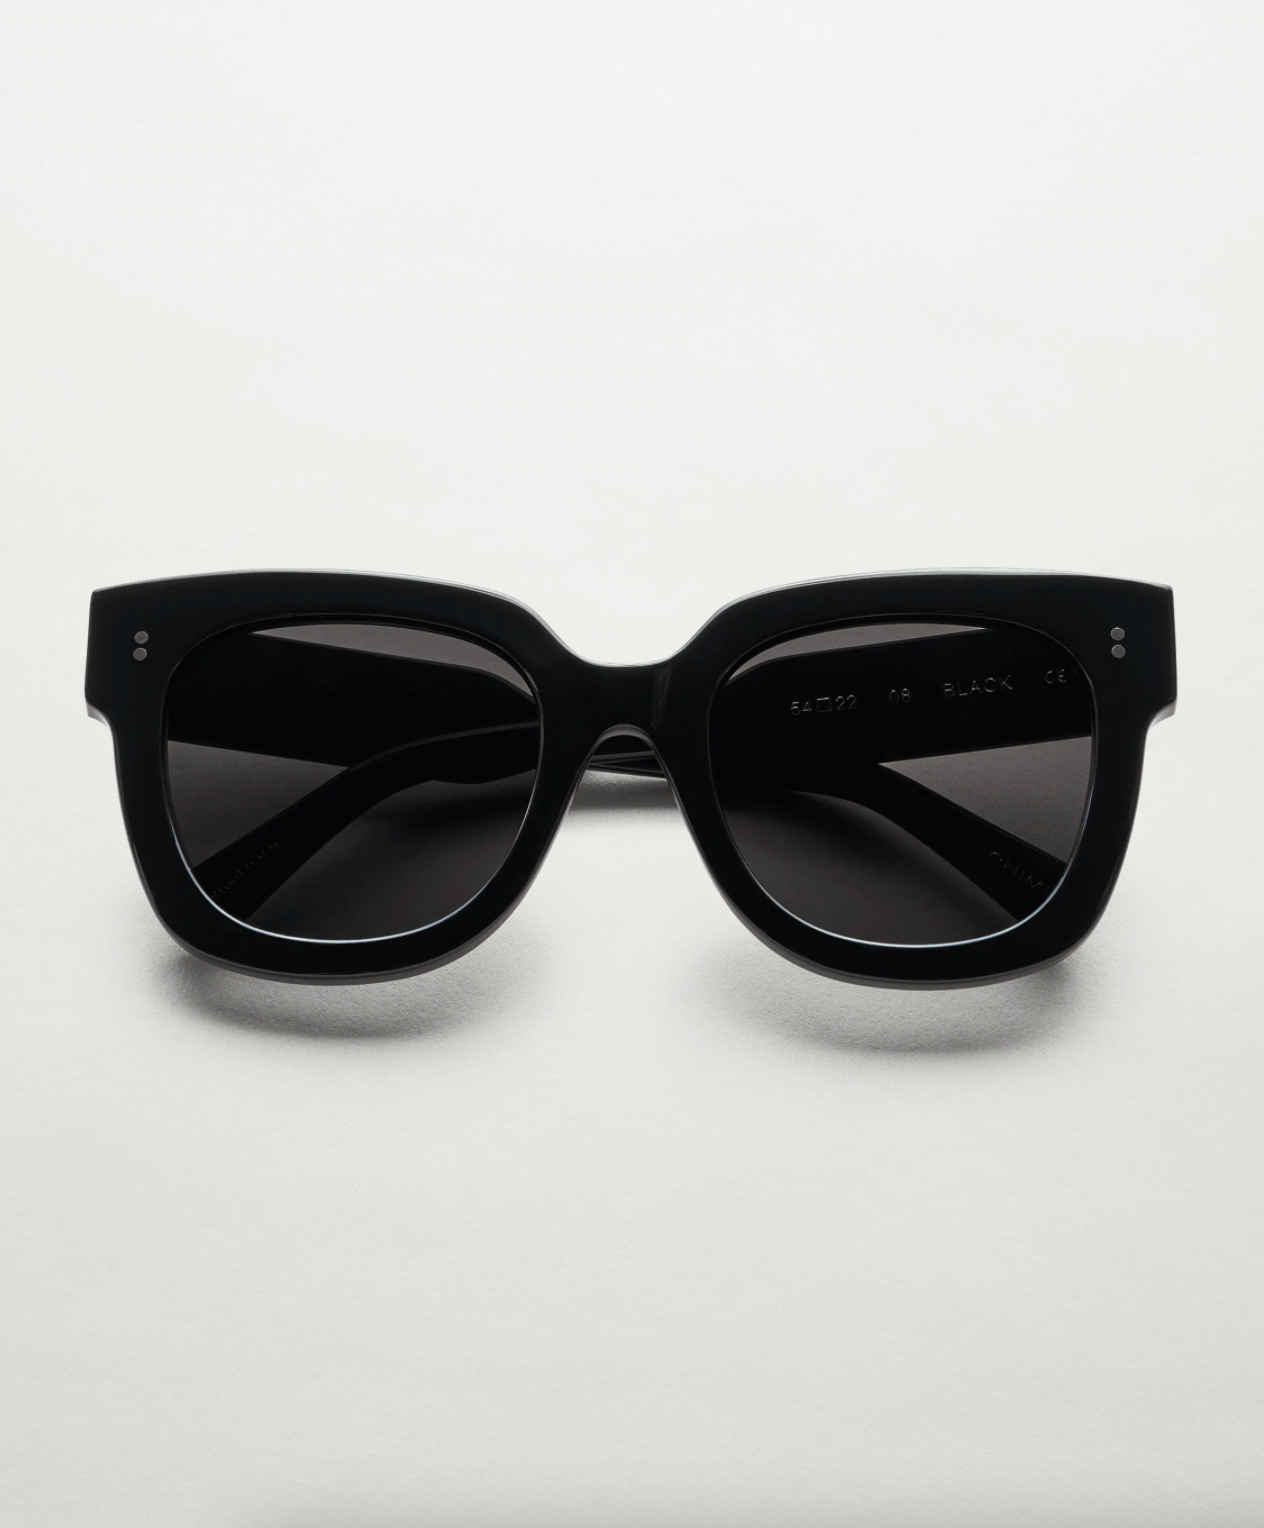 Oversize black sunglasses with a a black lense